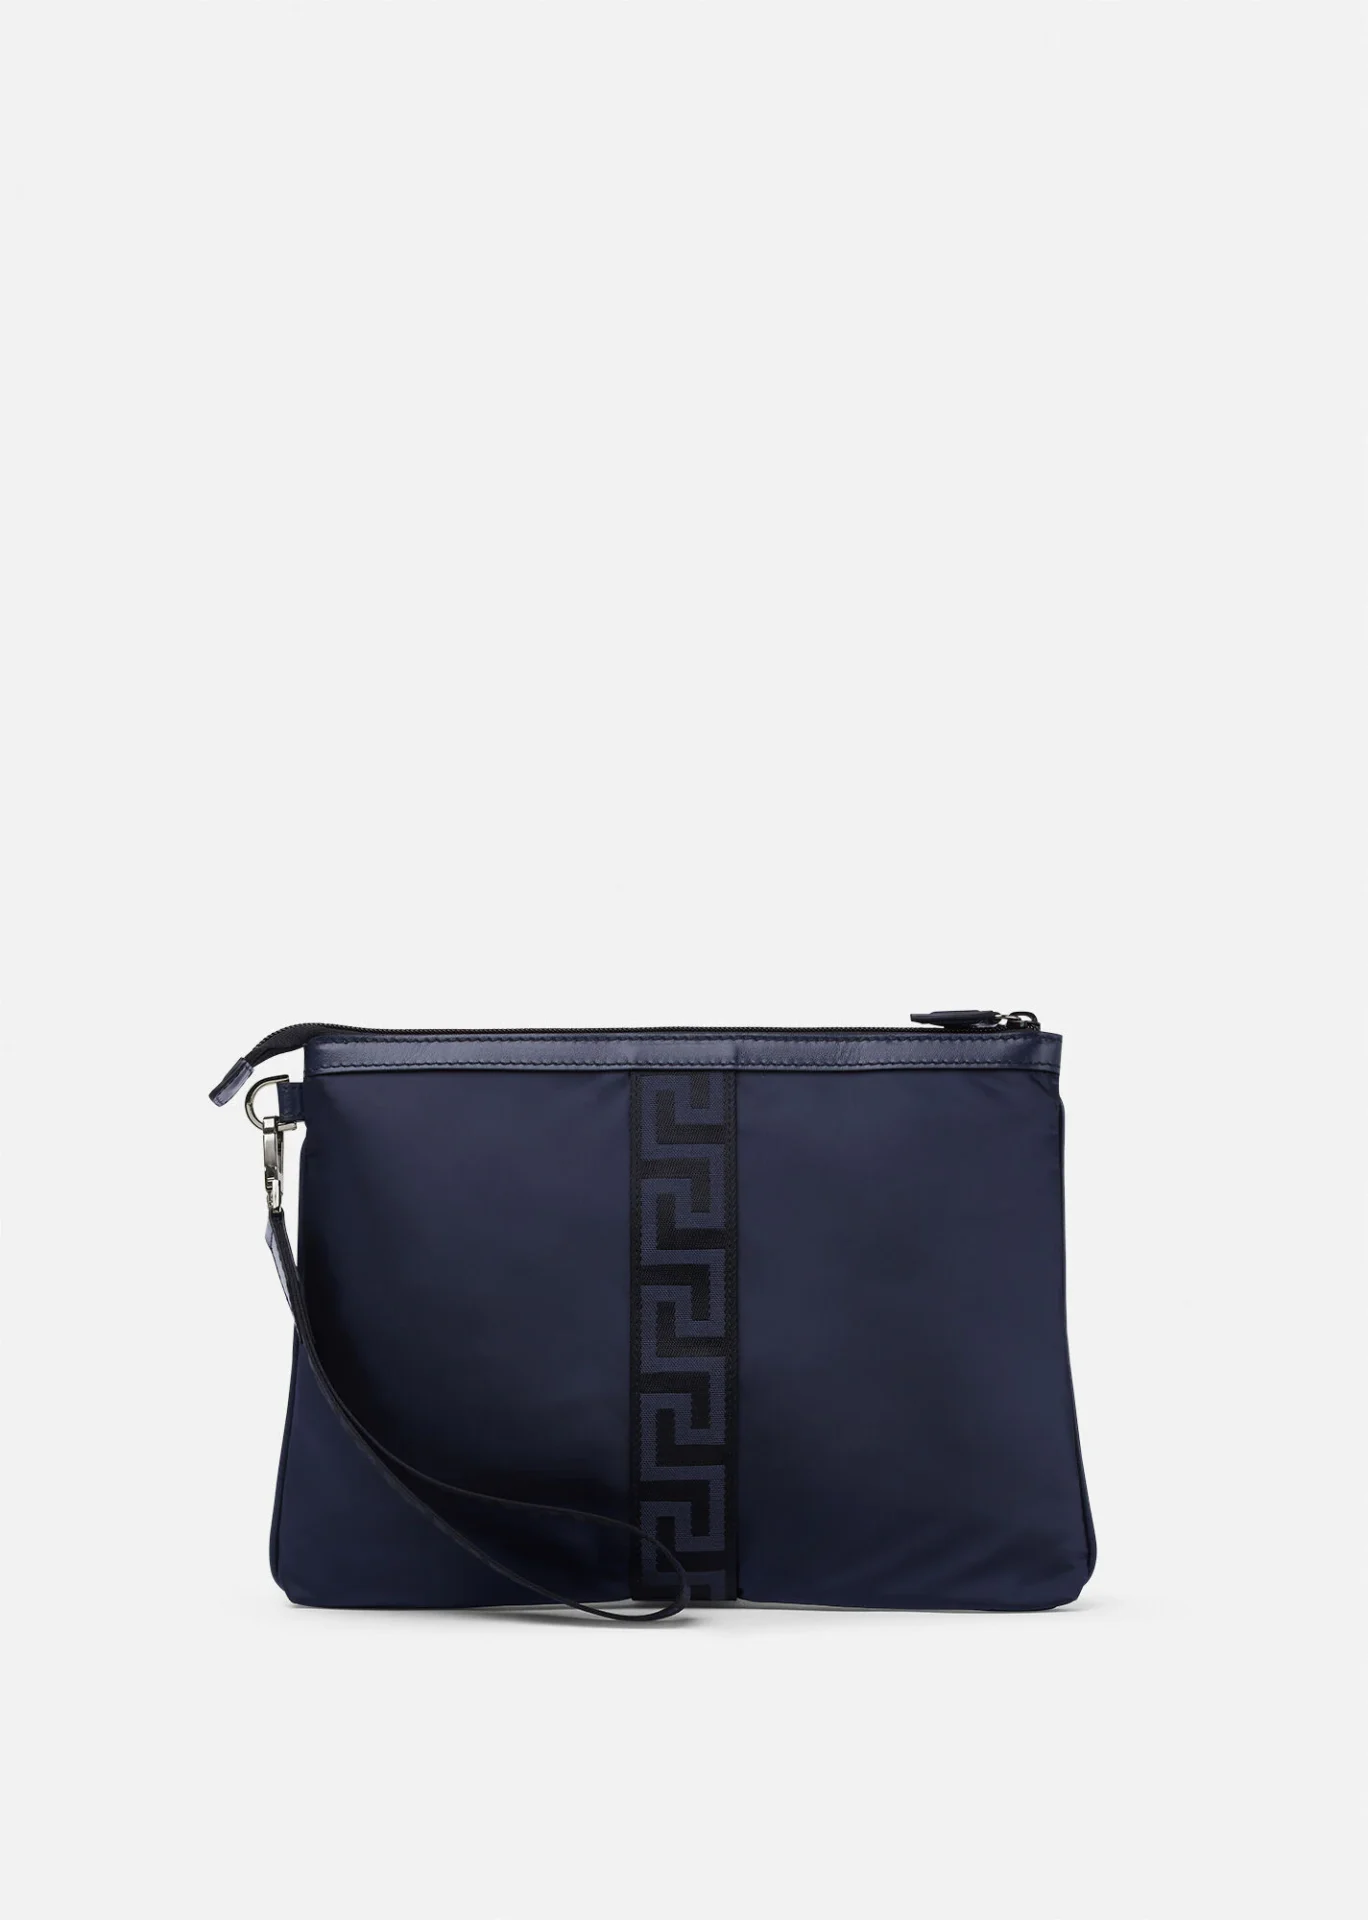 A navy blue black versace greca pouch bag